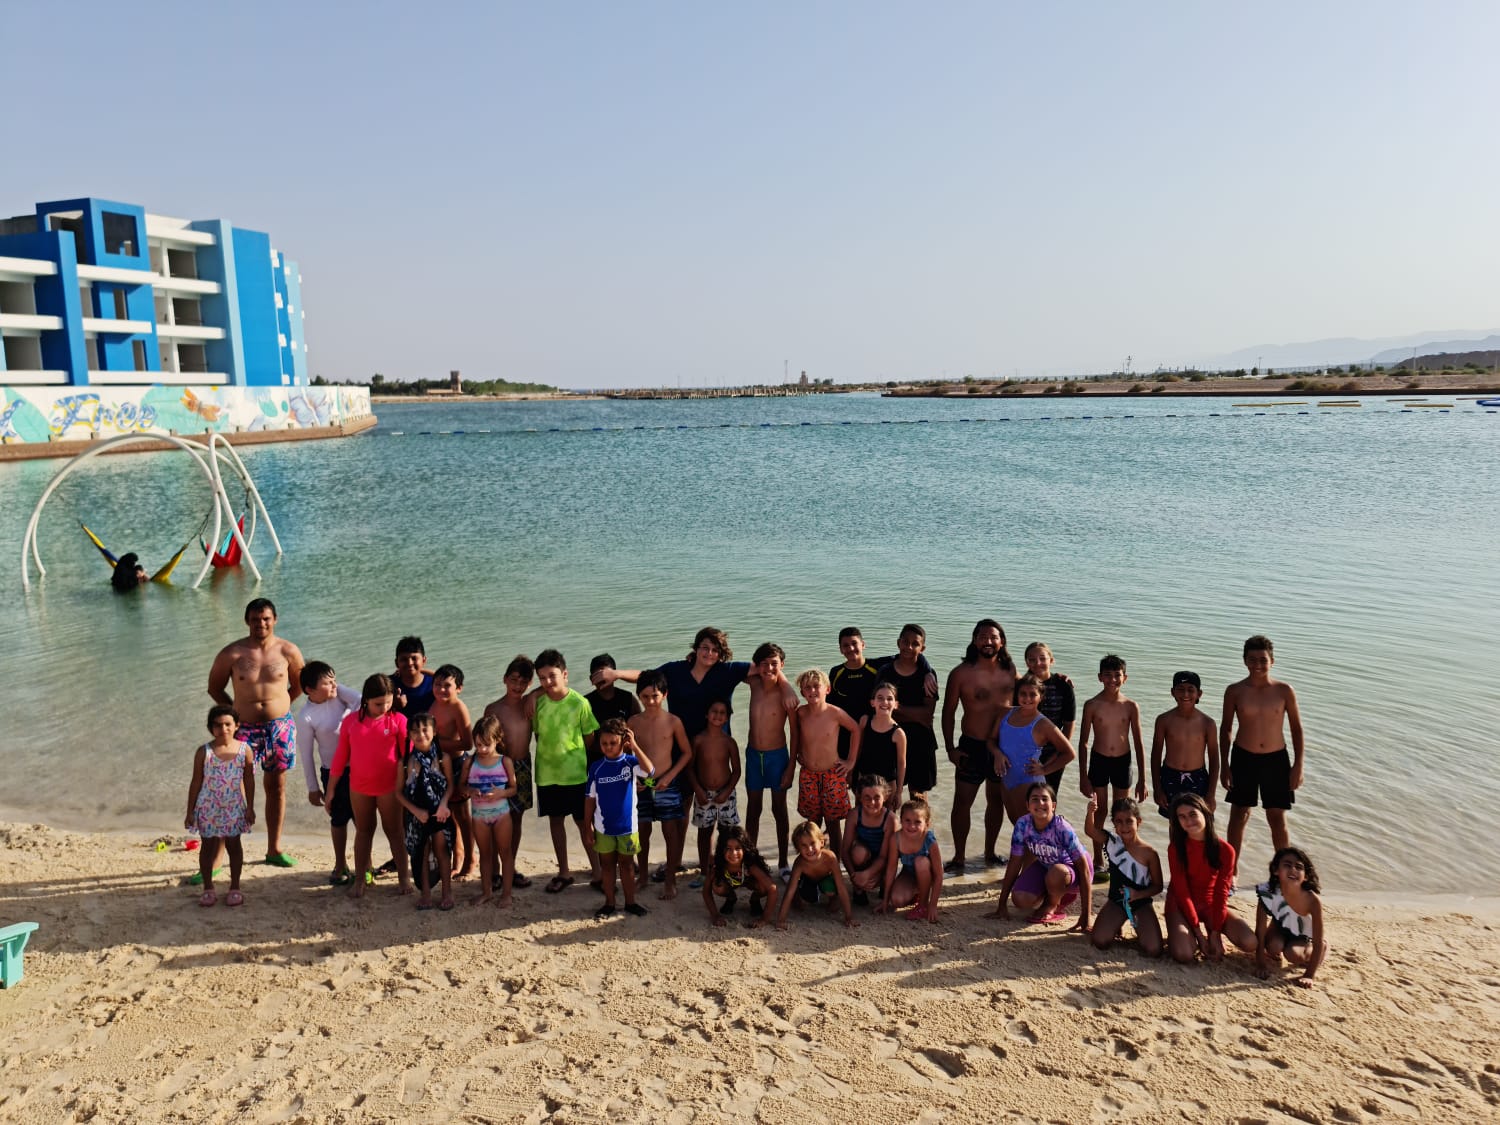 AYLA GOLF CLUB KICKS OFF FIRST CHILDREN’S SUMMER CAMP